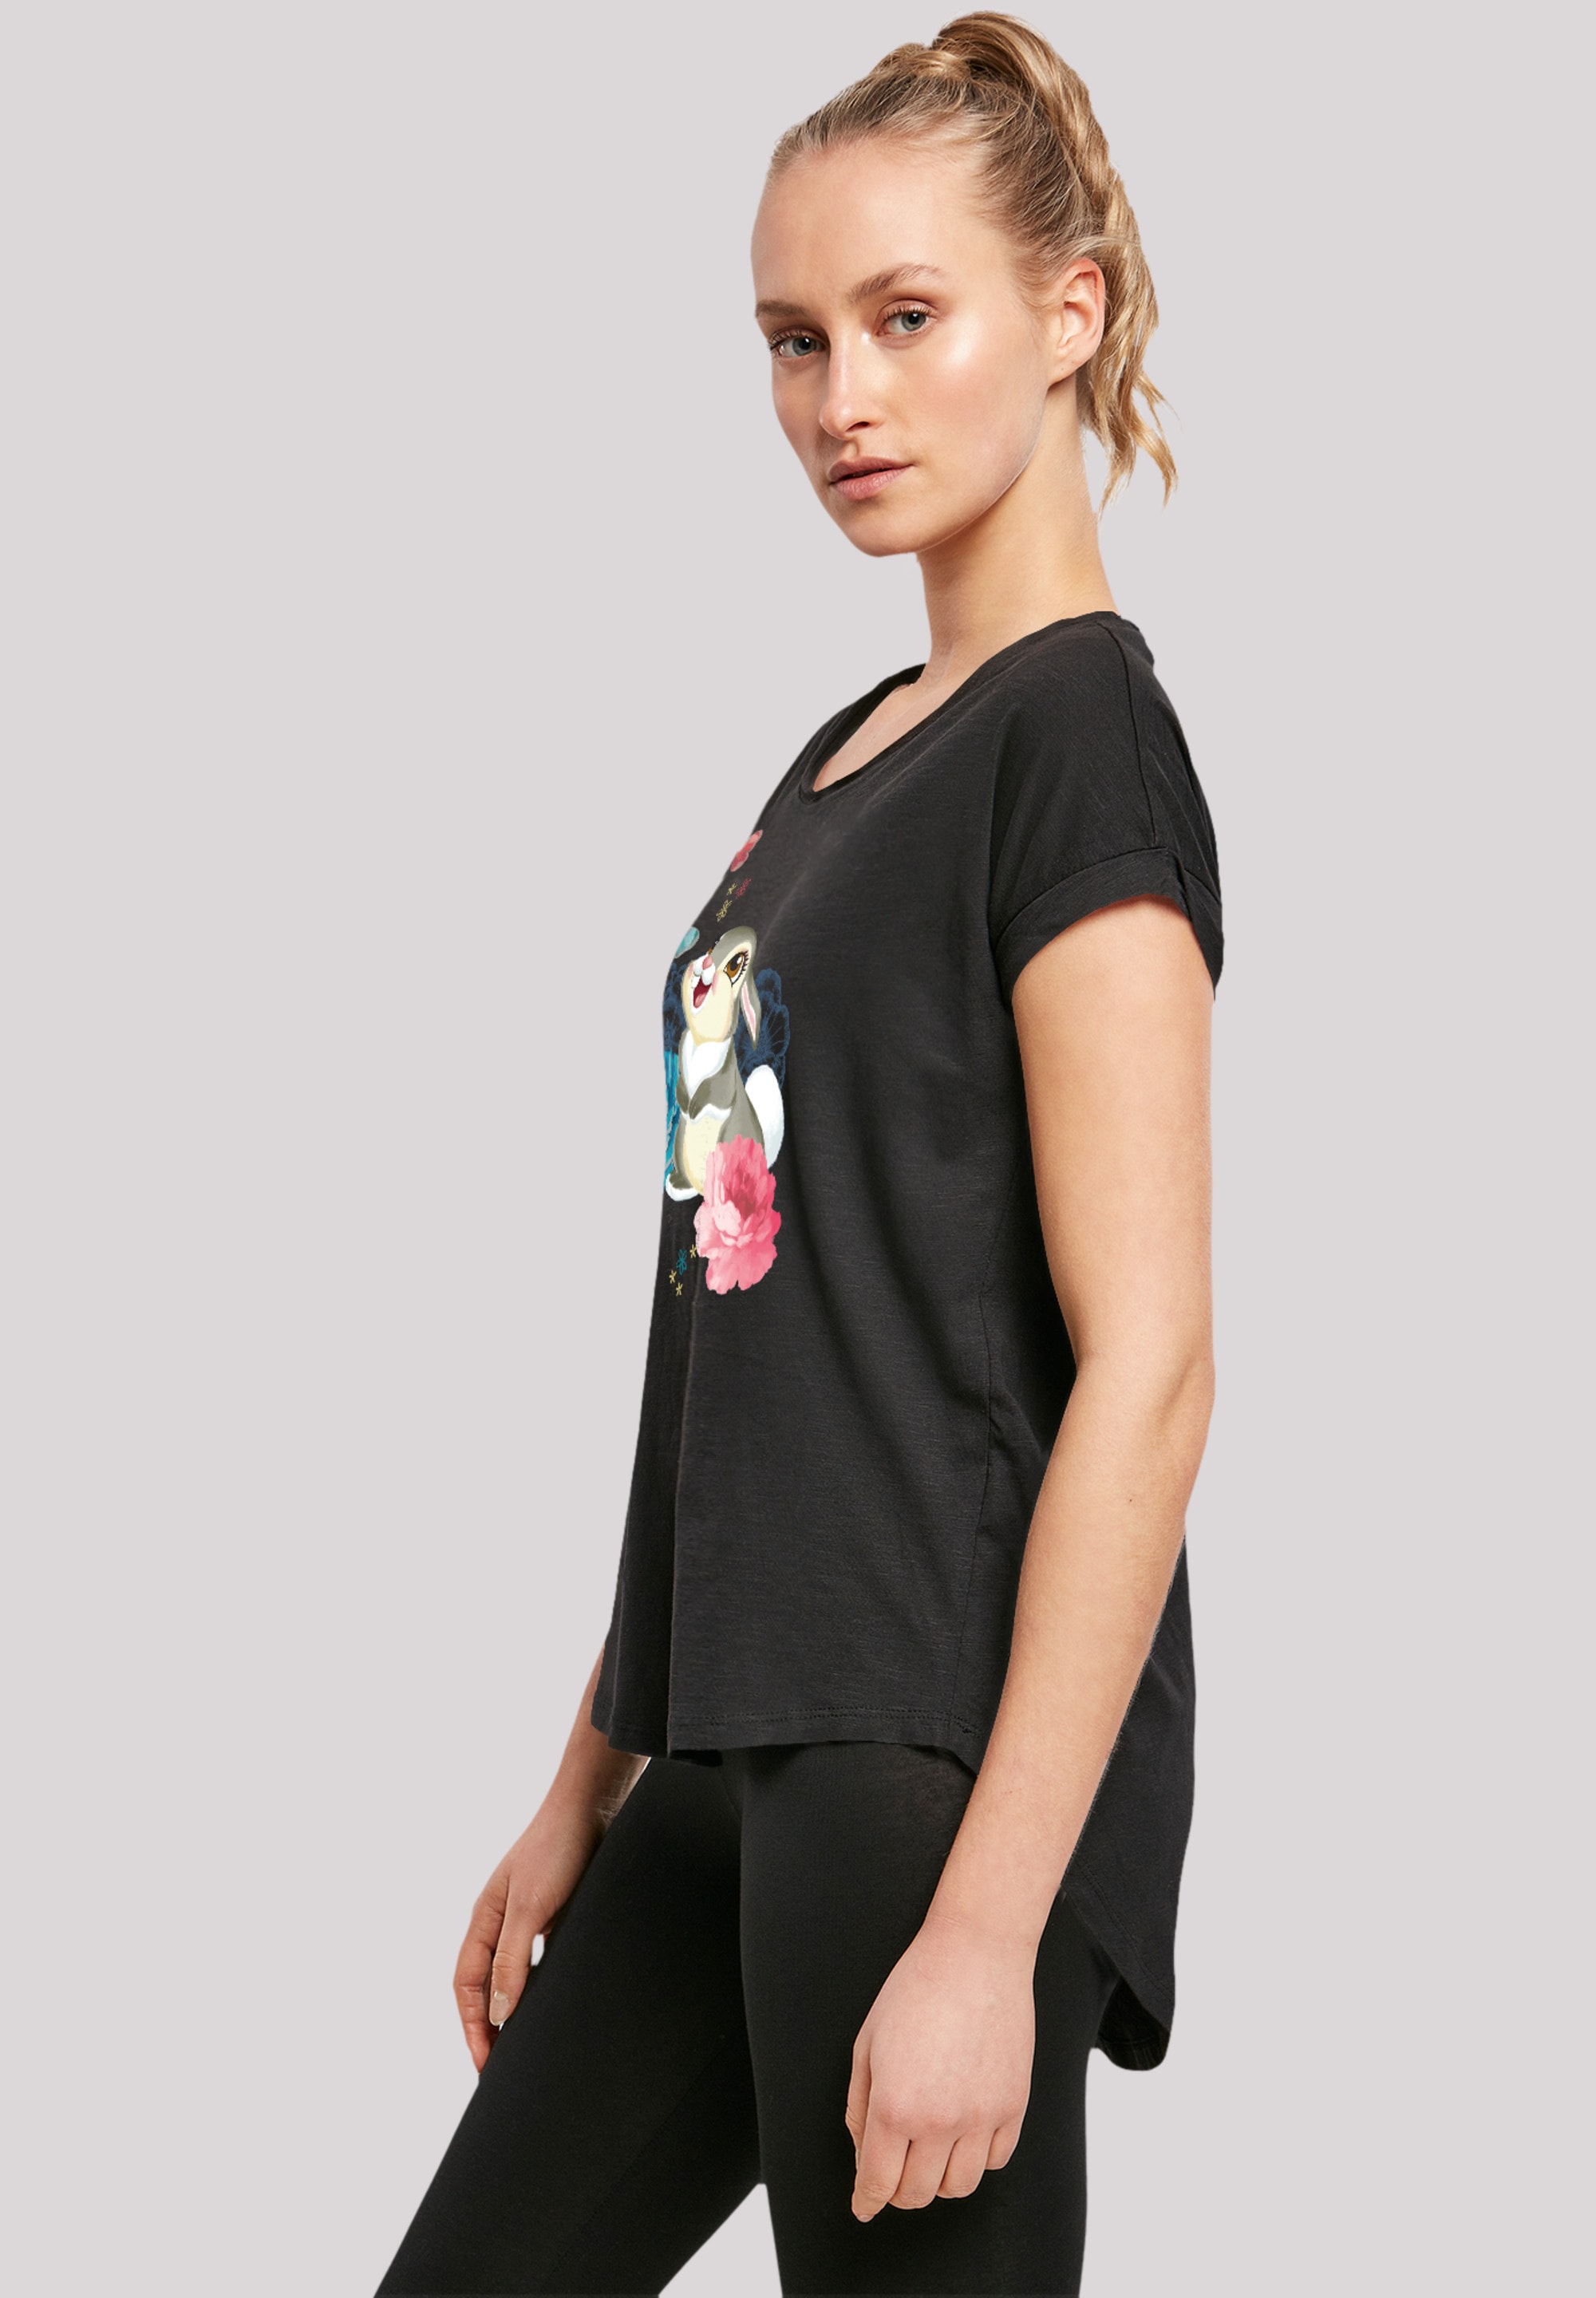 Bambi walking Qualität T-Shirt Thumper«, I\'m F4NT4STIC online »Disney | Premium kaufen